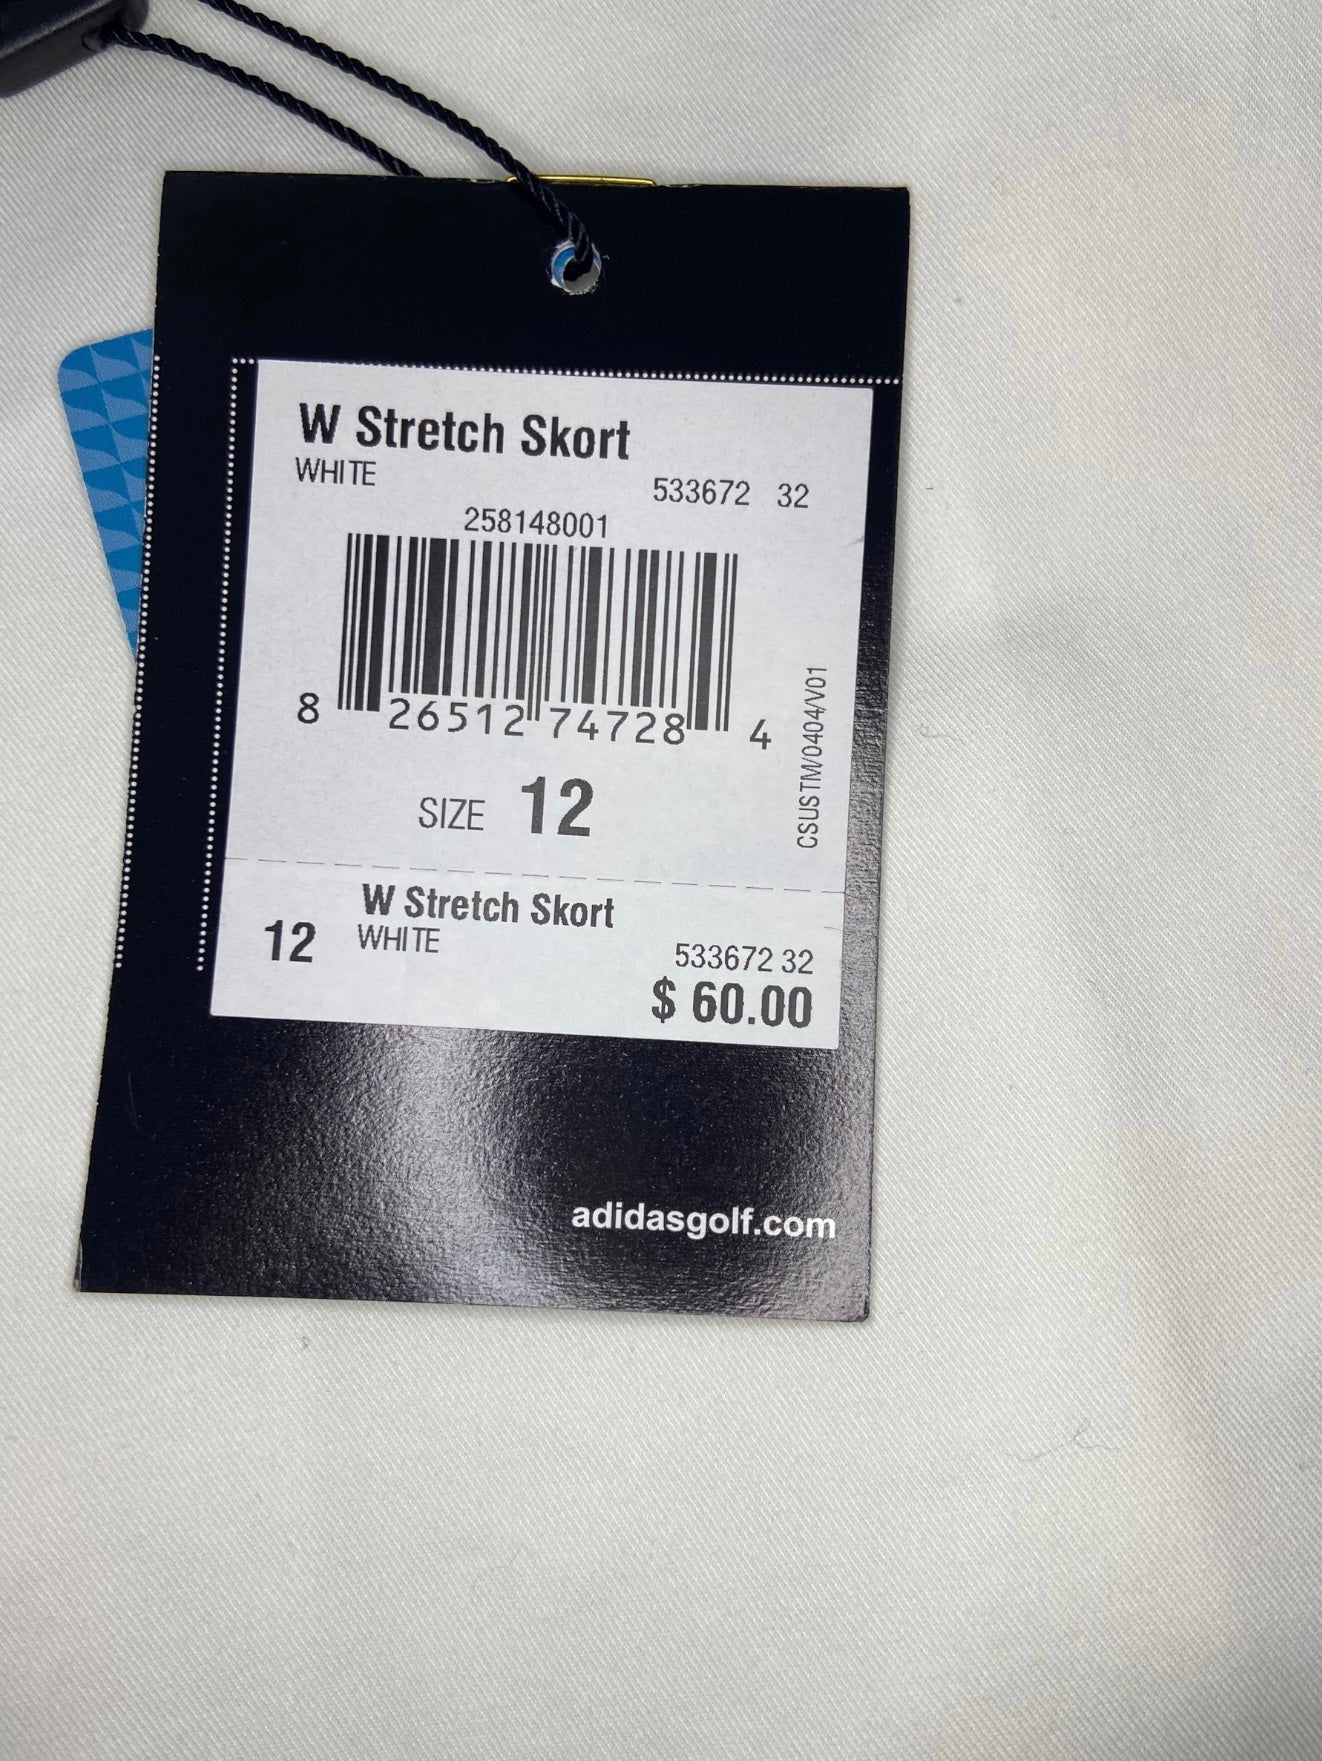 NWT Adidas Woman's Stretch Skort in White Size 12